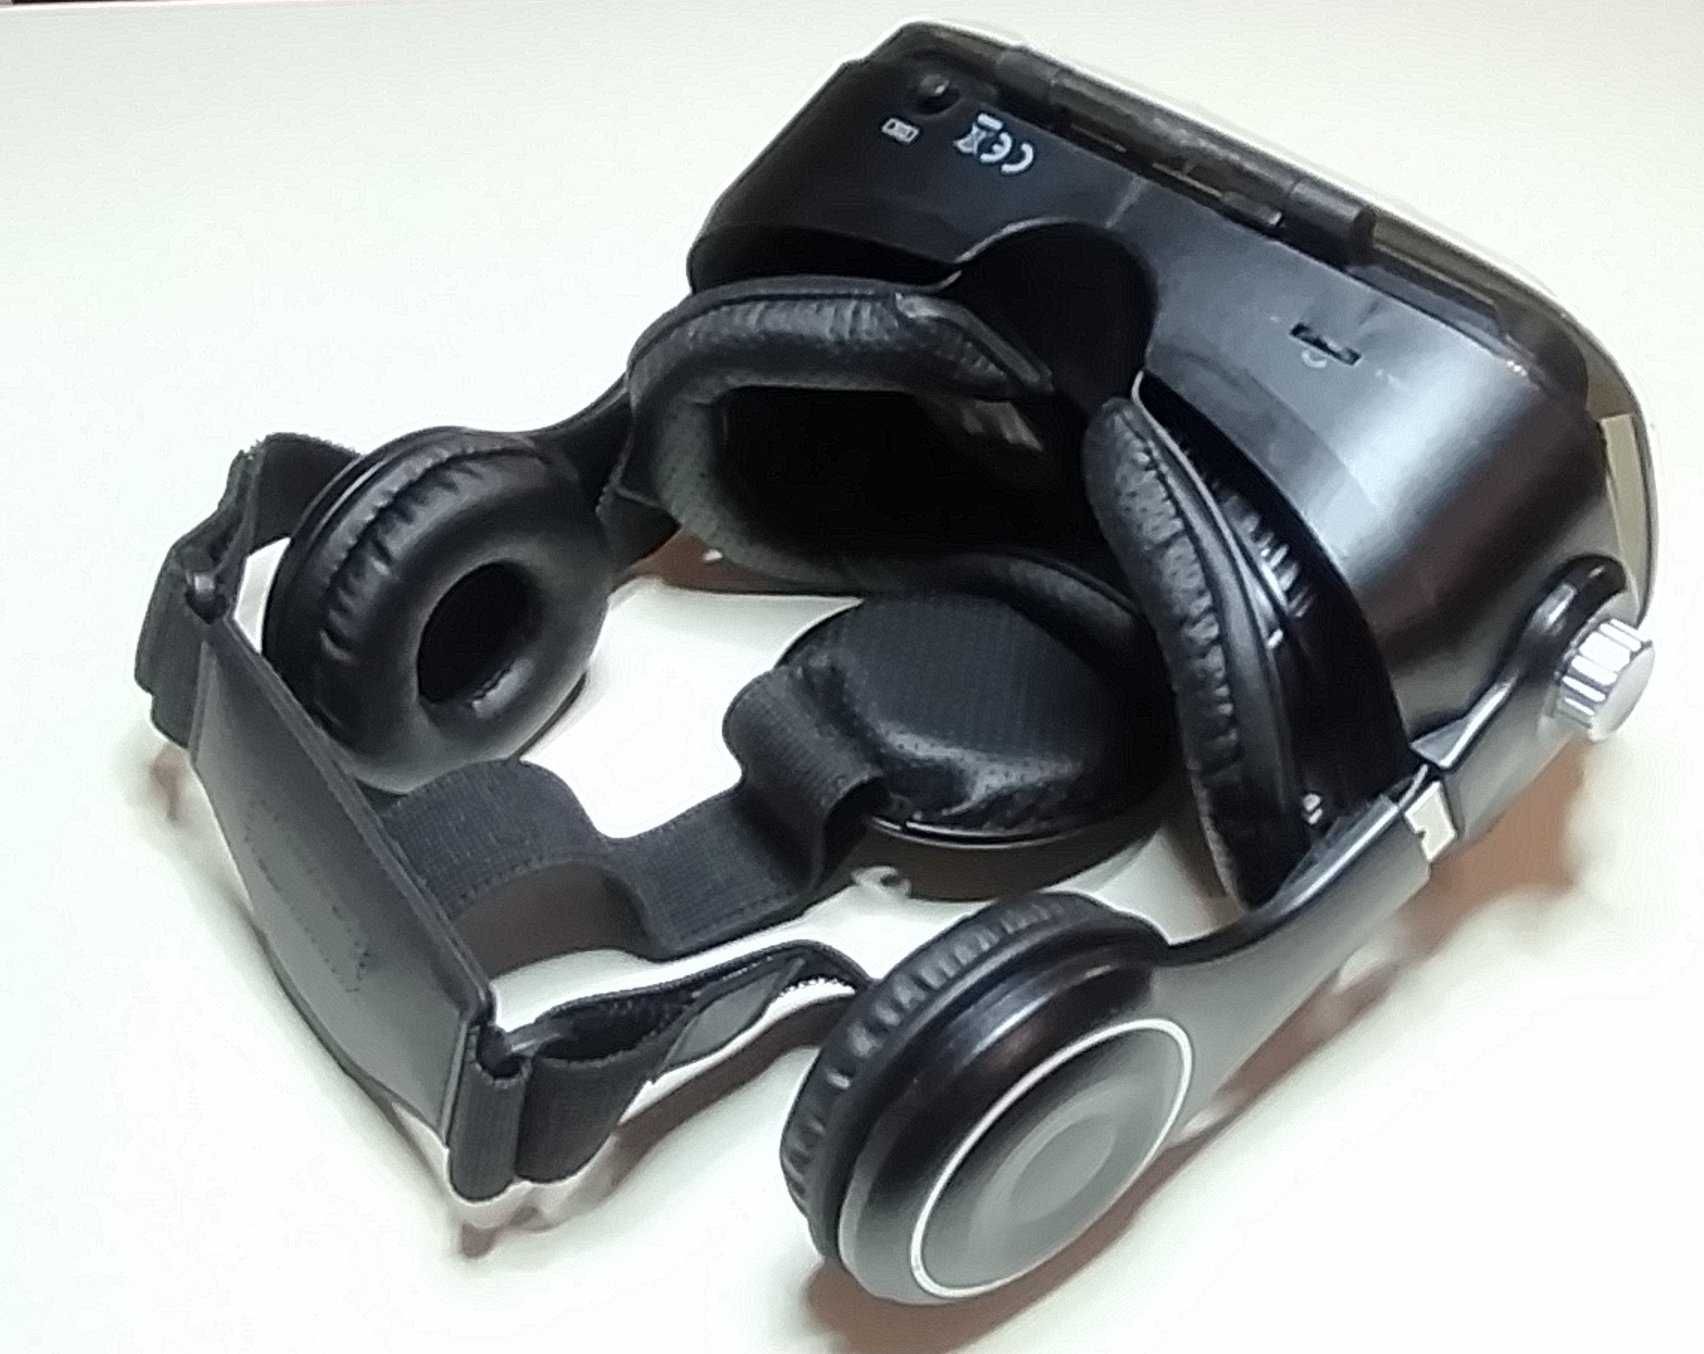 Gogle VR na telefon zintegrowane słuchawki